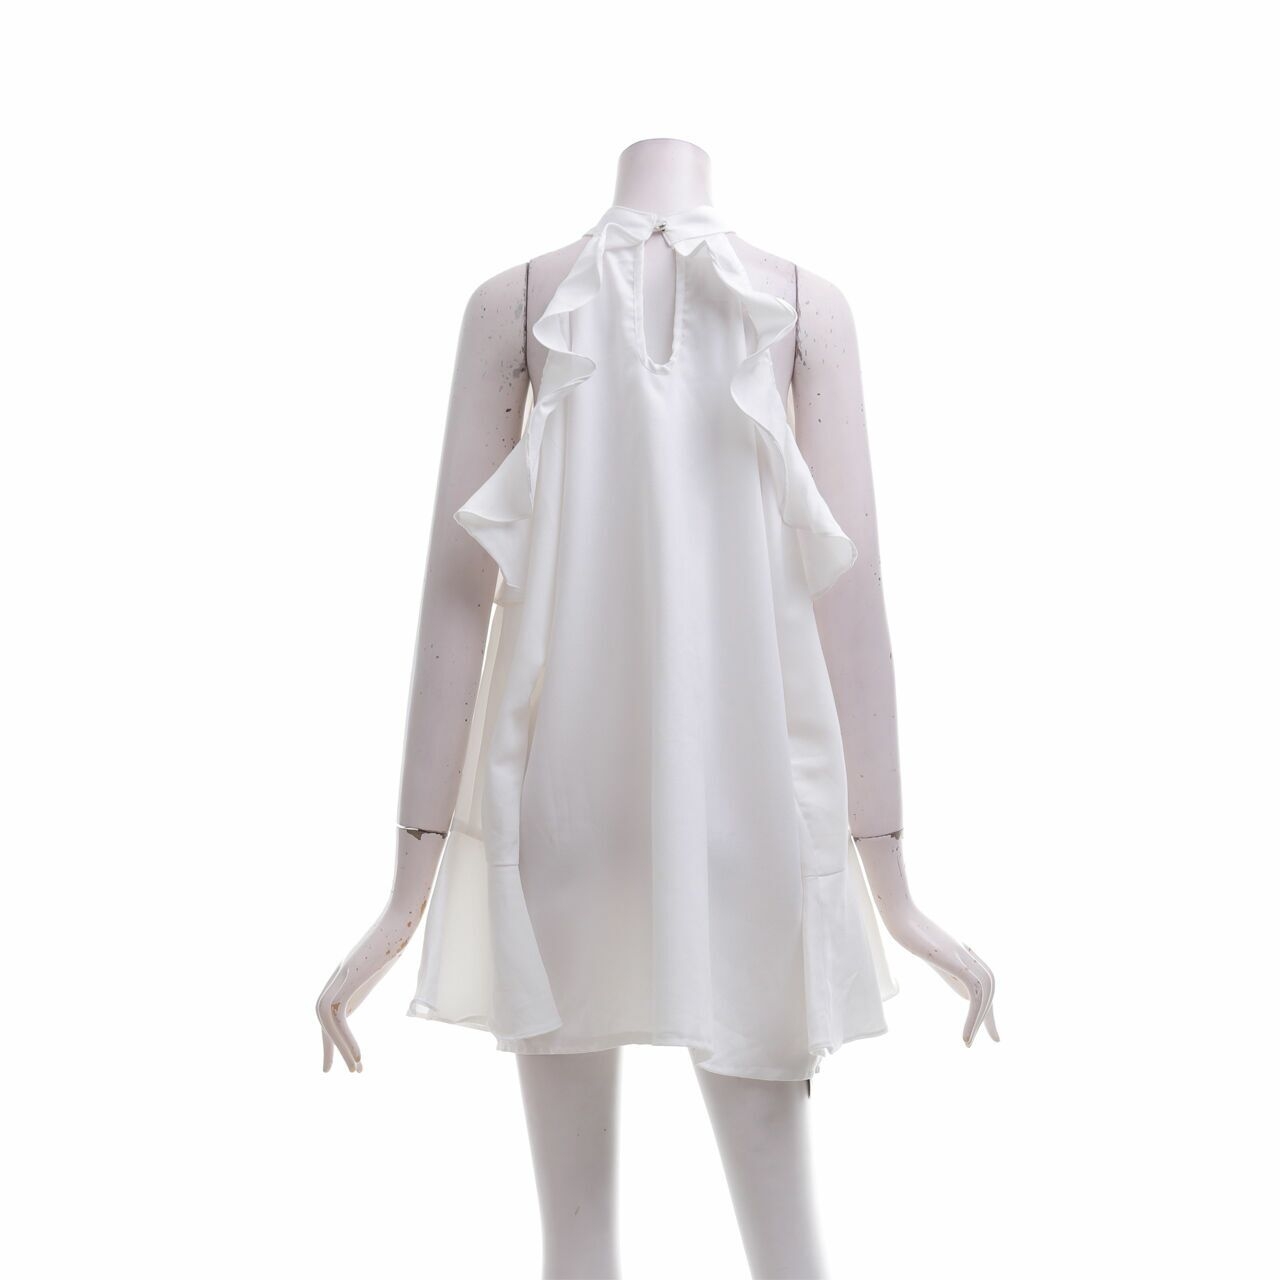 Pluffy's Choice White Mini Dress